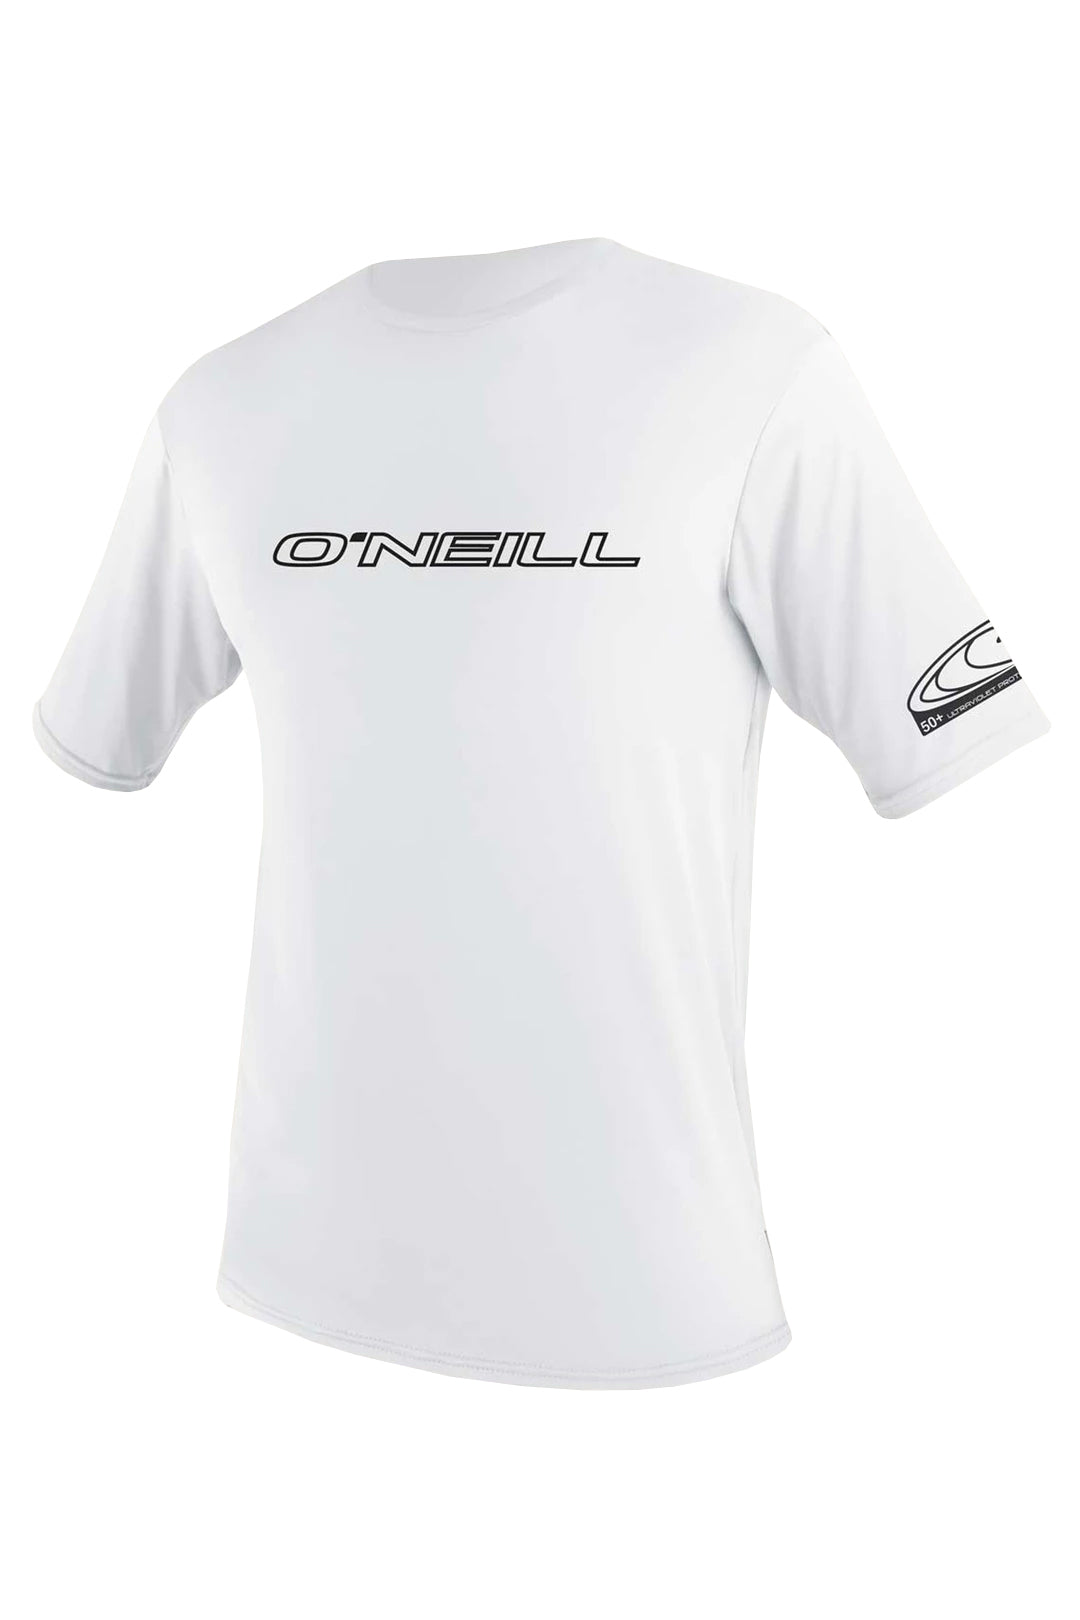 O'Neill Youth Basic Skins 50 SS Sun Shirt 009-Graphite 6